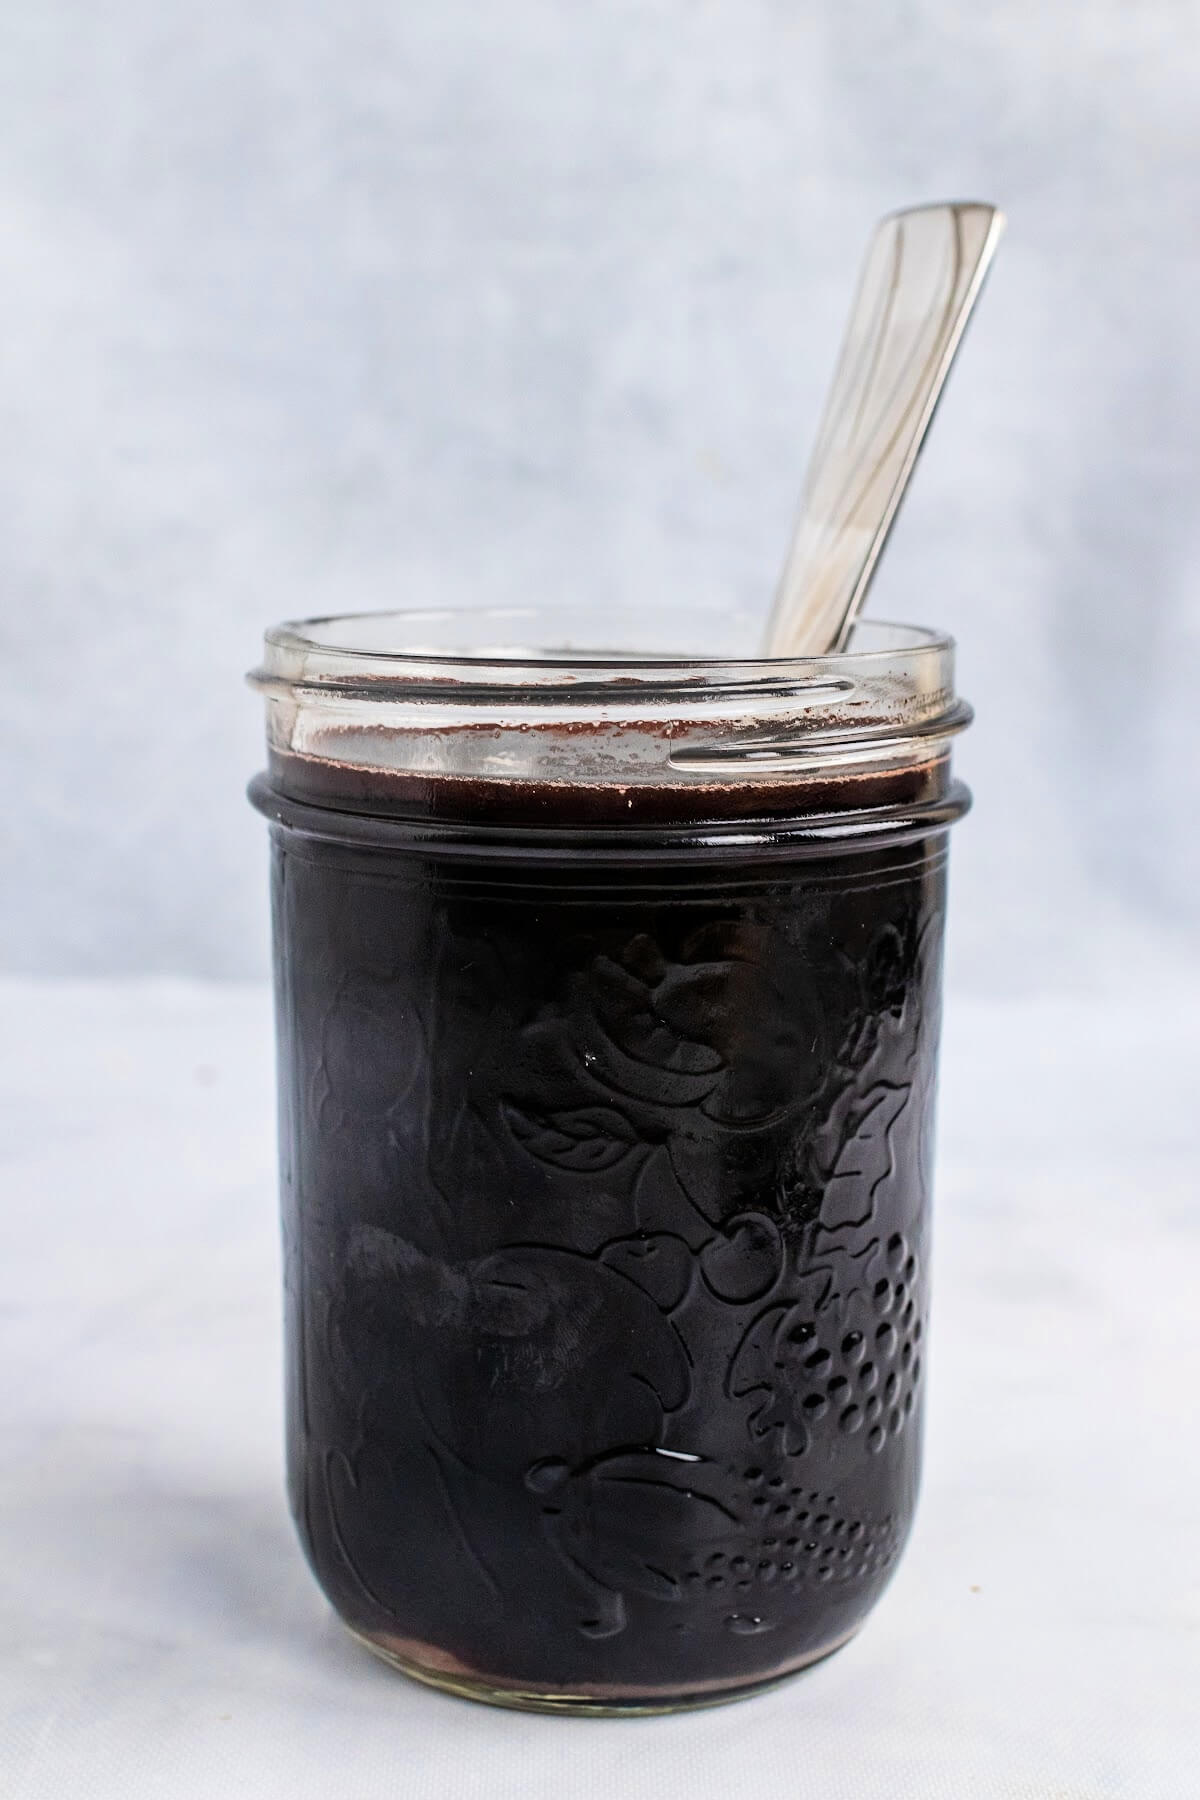 Mason jar full of dark purple syrup with a spoon sitting in the jar.